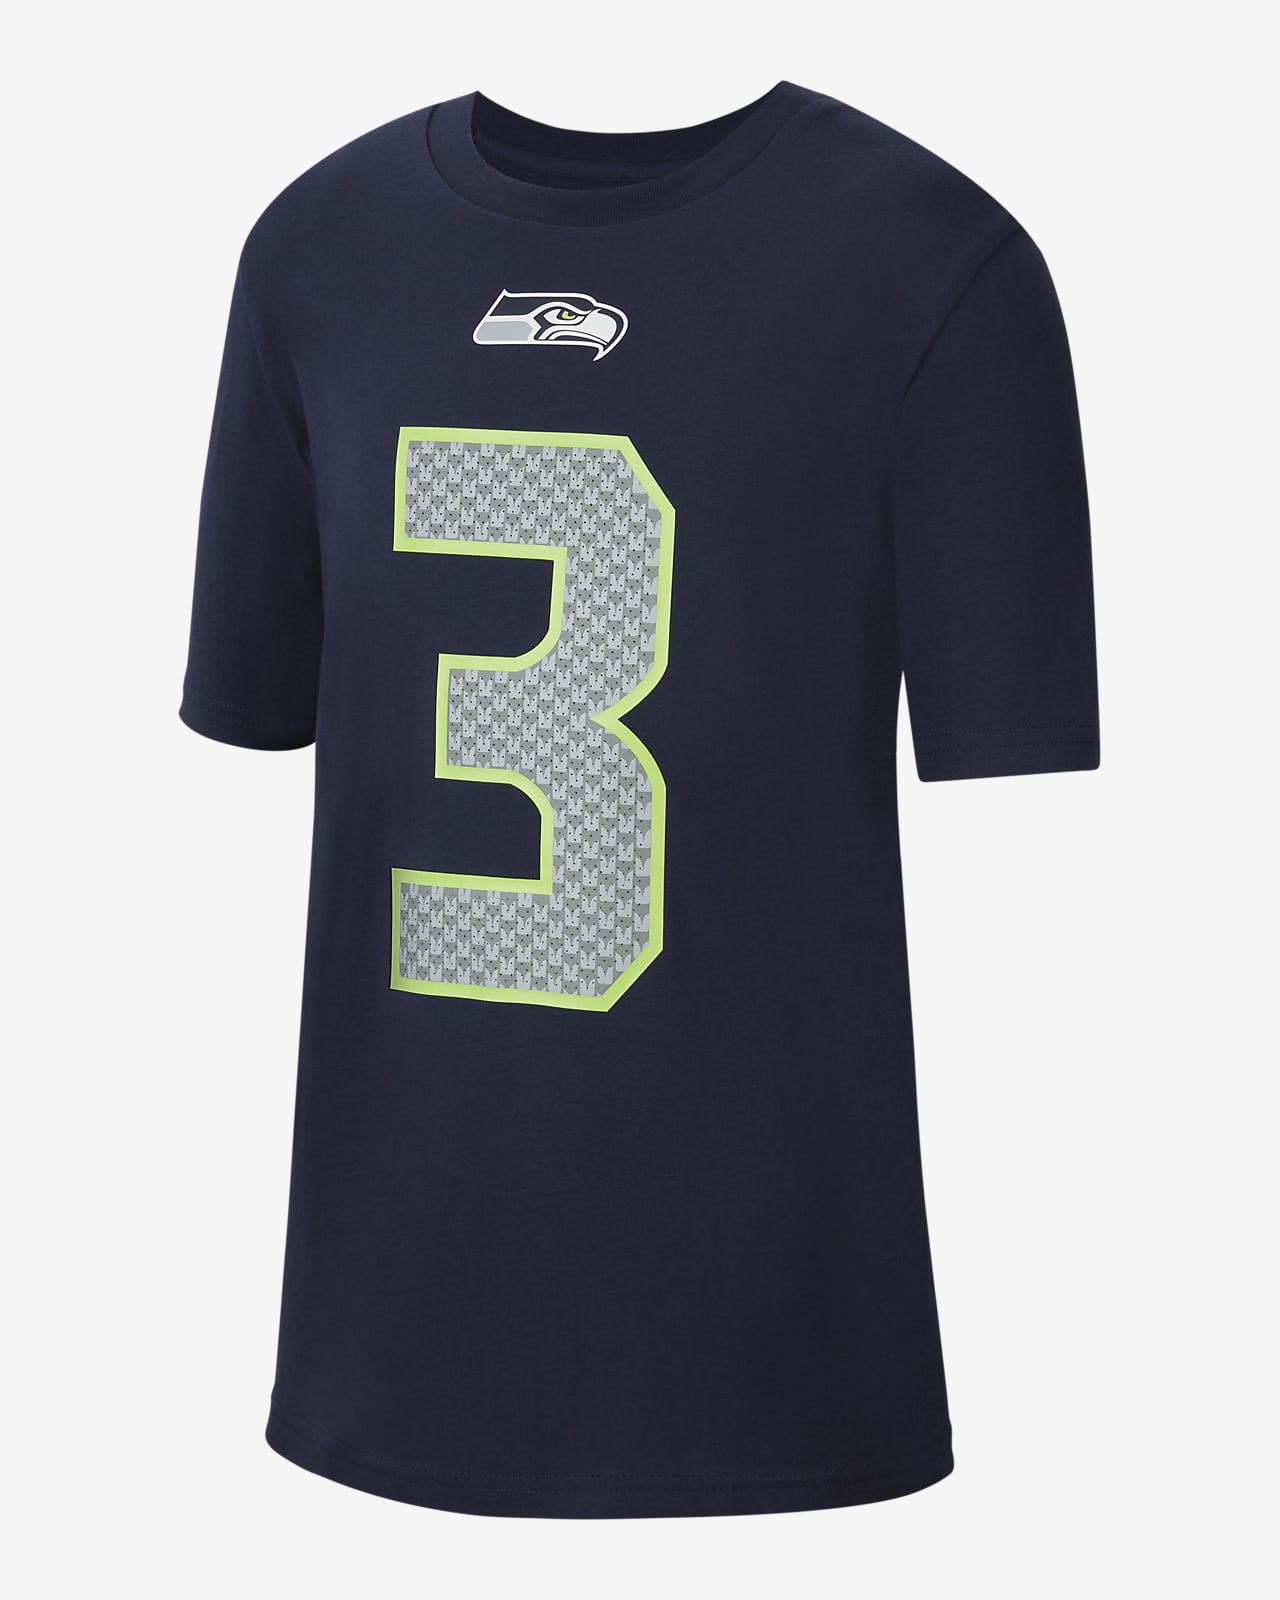 T-Shirt Nike (NFL Seattle Seahawks) για μεγάλα παιδιά